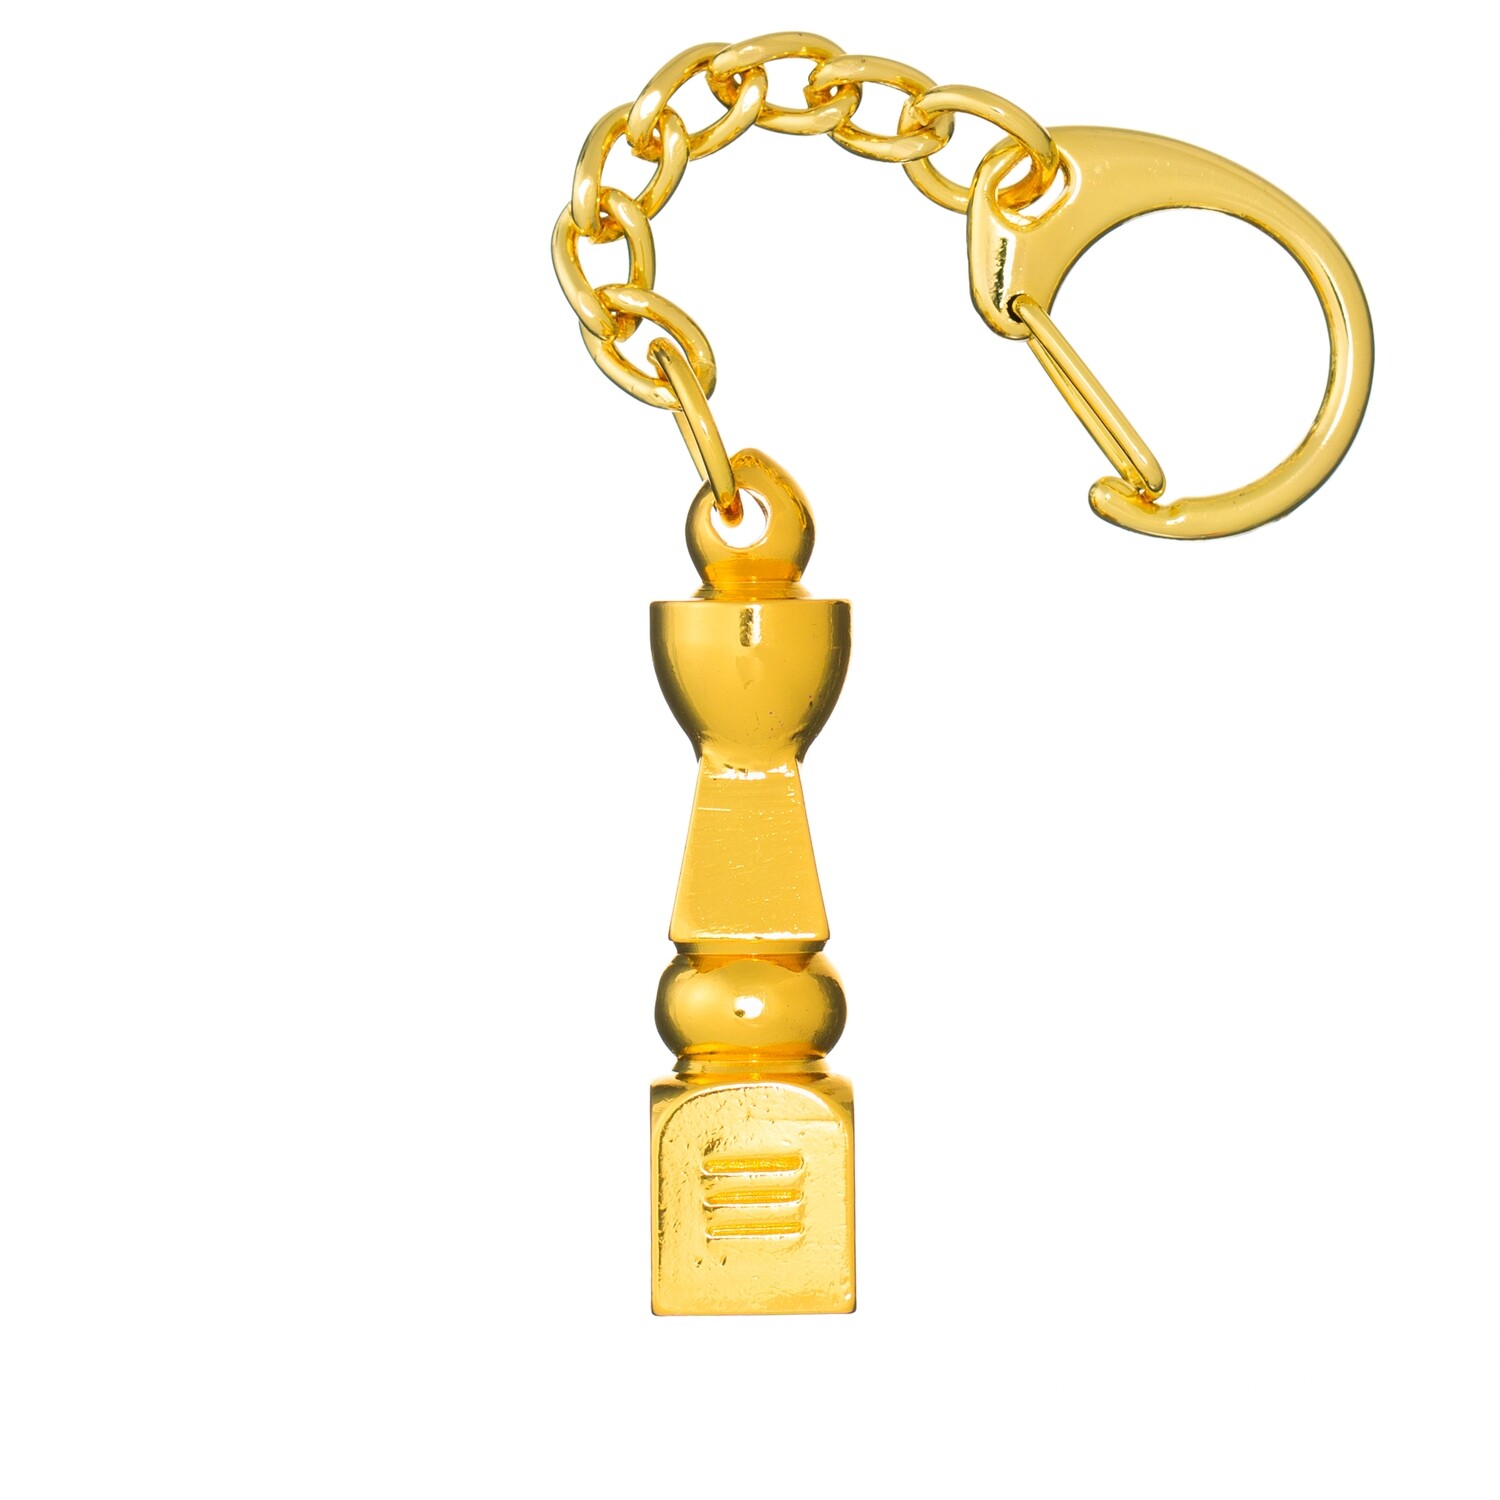 5 element pagoda Charm, Key chain, Amulet 2021